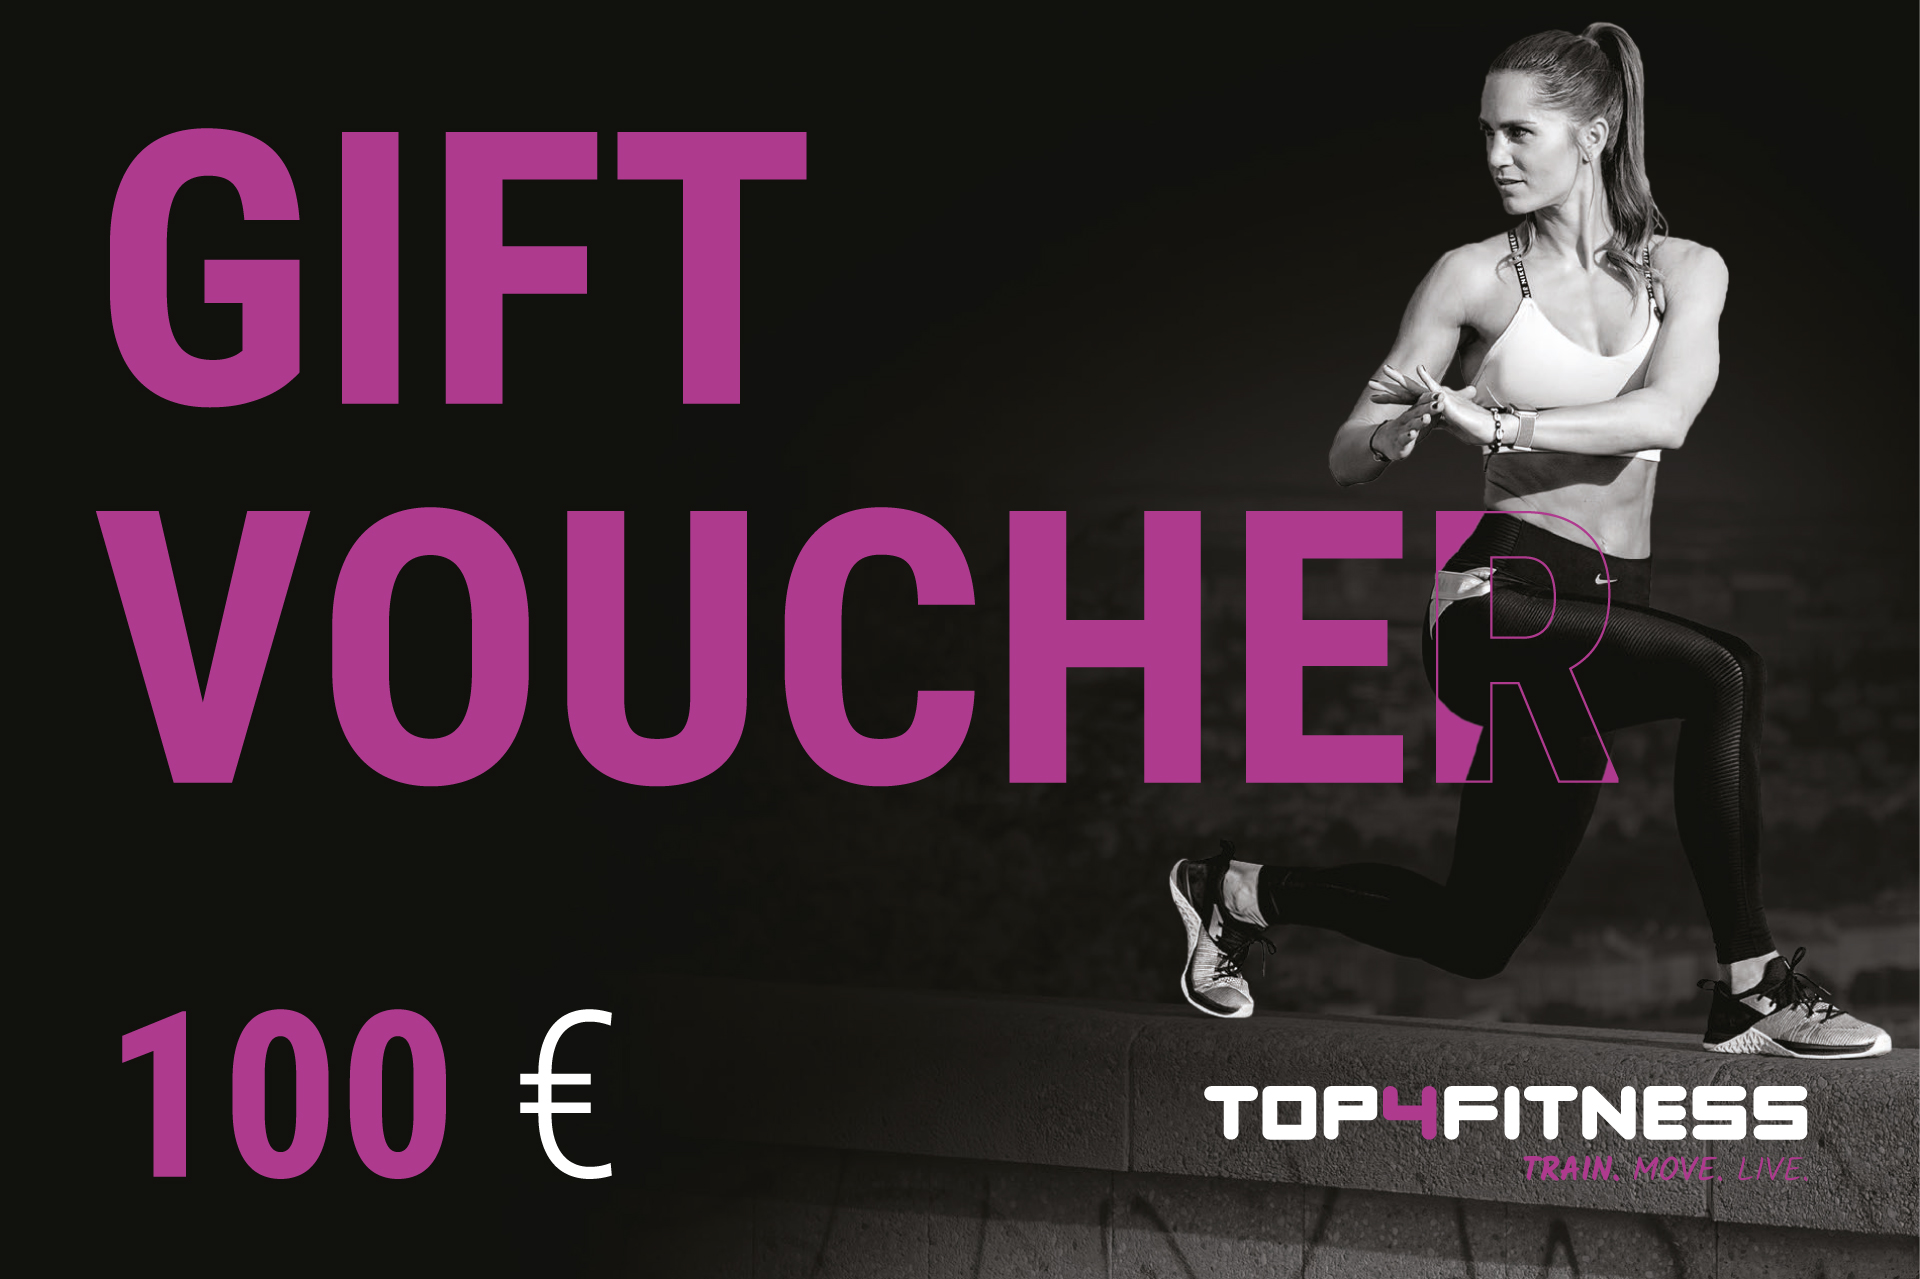 Top4fitness gift voucher worth 100€